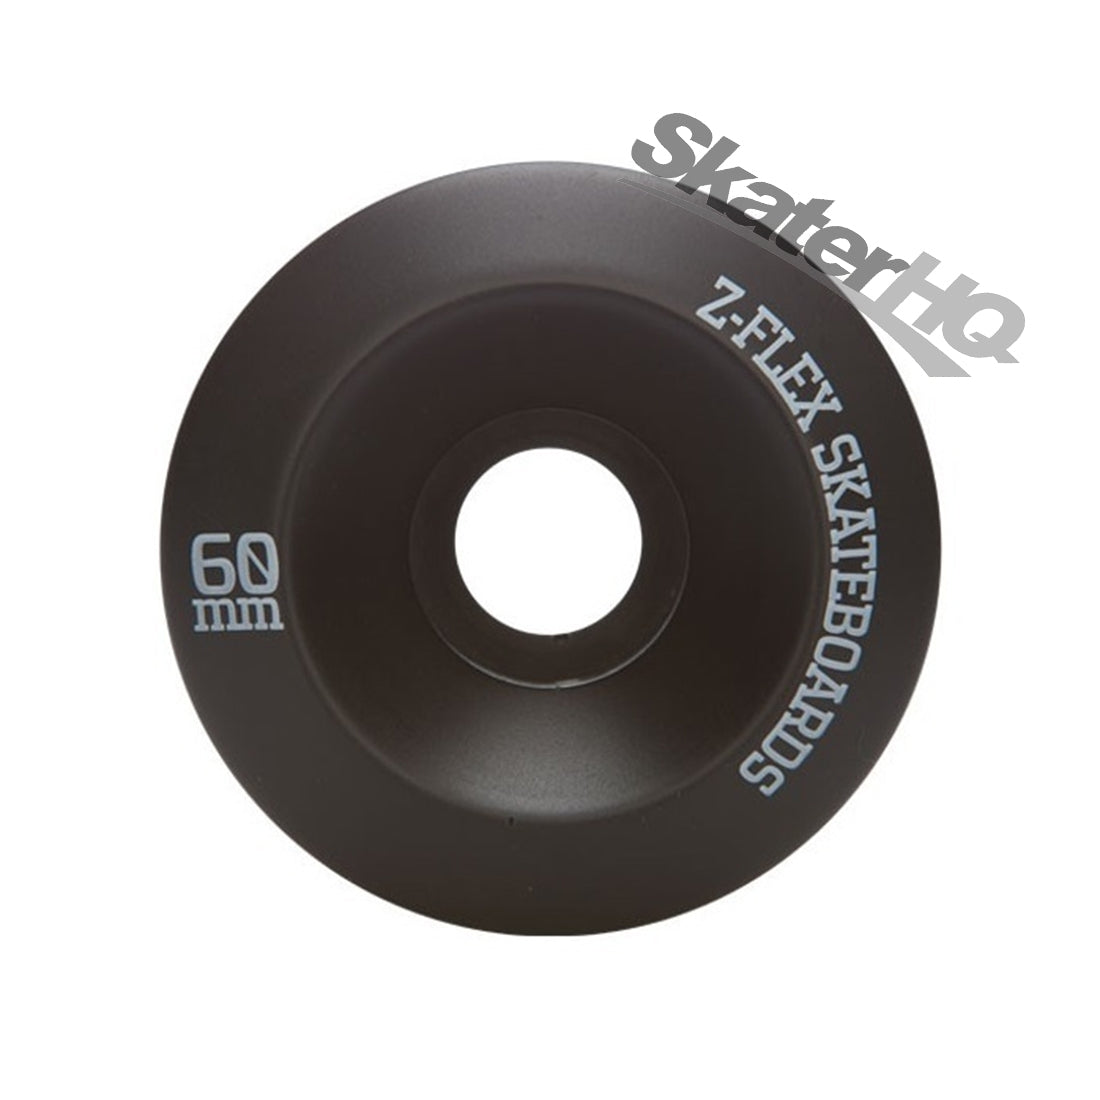 Z-Flex Z-Pro 60mm/90a 4pk - Black Skateboard Wheels